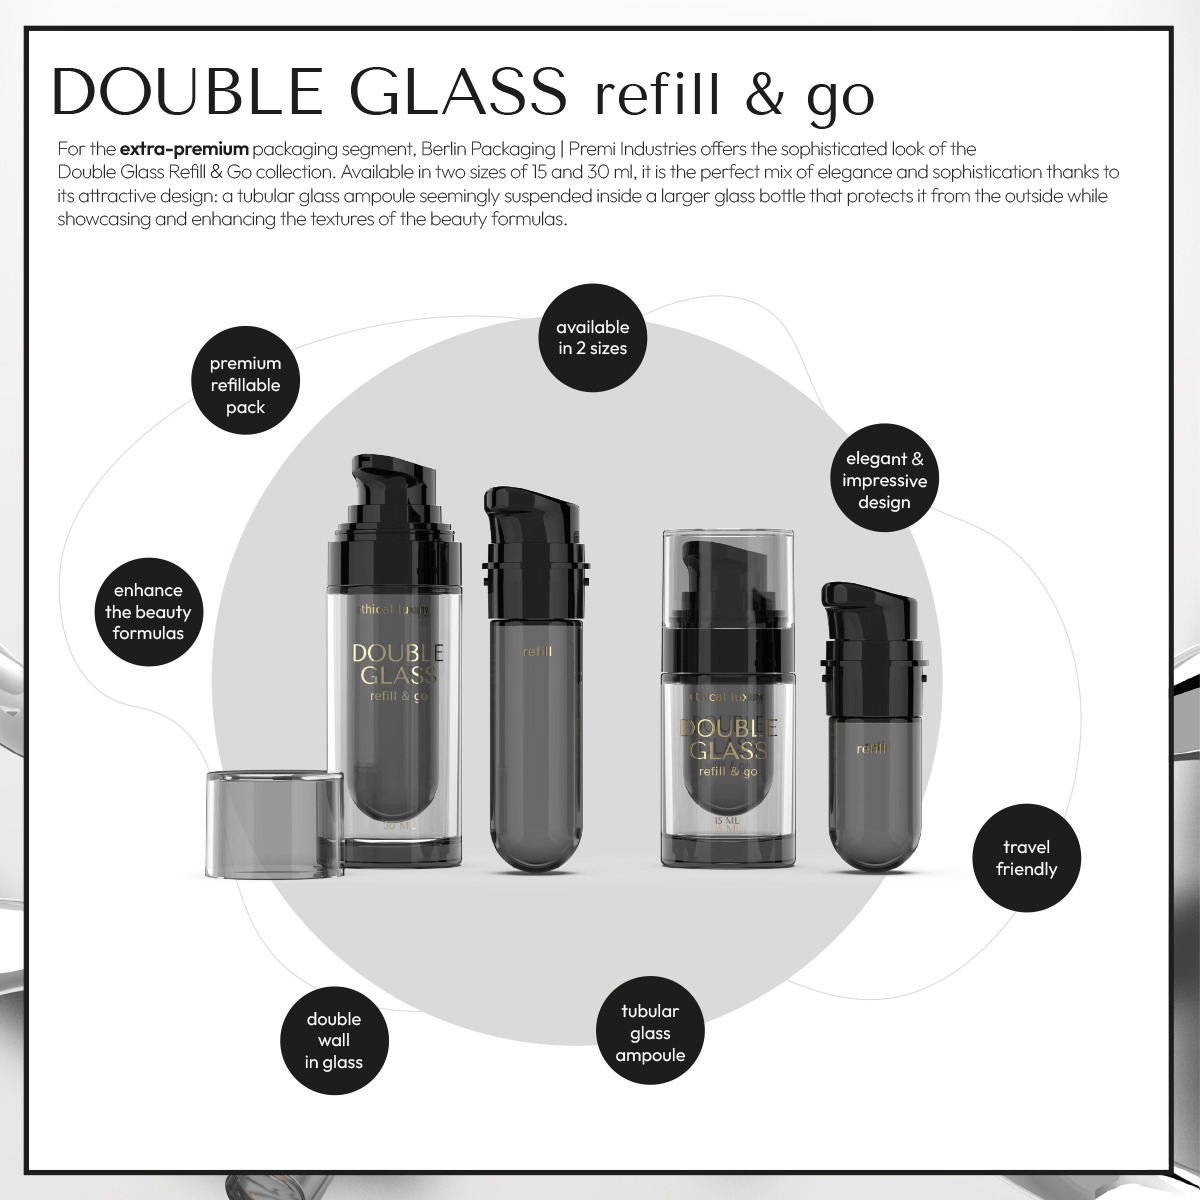 02-DOUBLE GLASS REFILL & GO